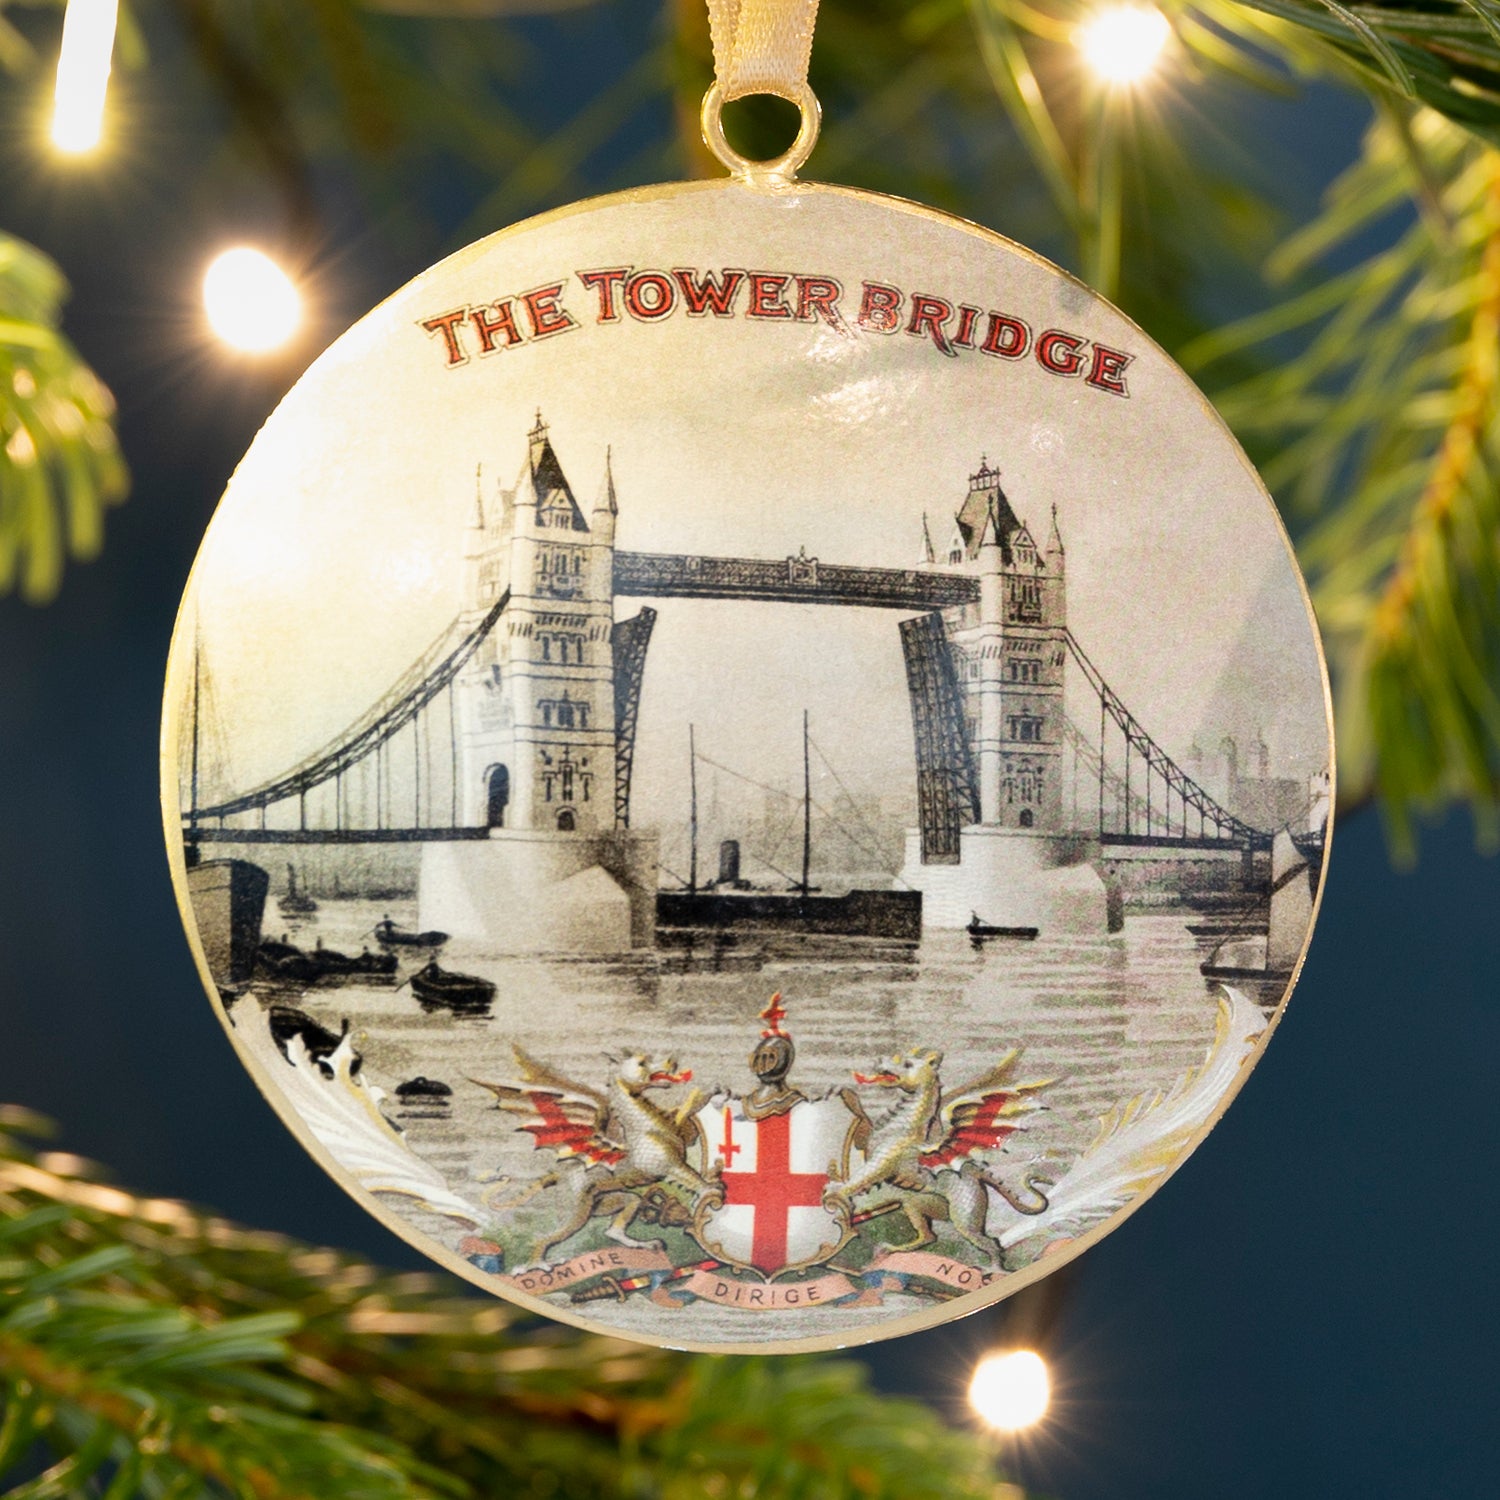 Vintage metal Tower Bridge decoration hanging from Christmas tree